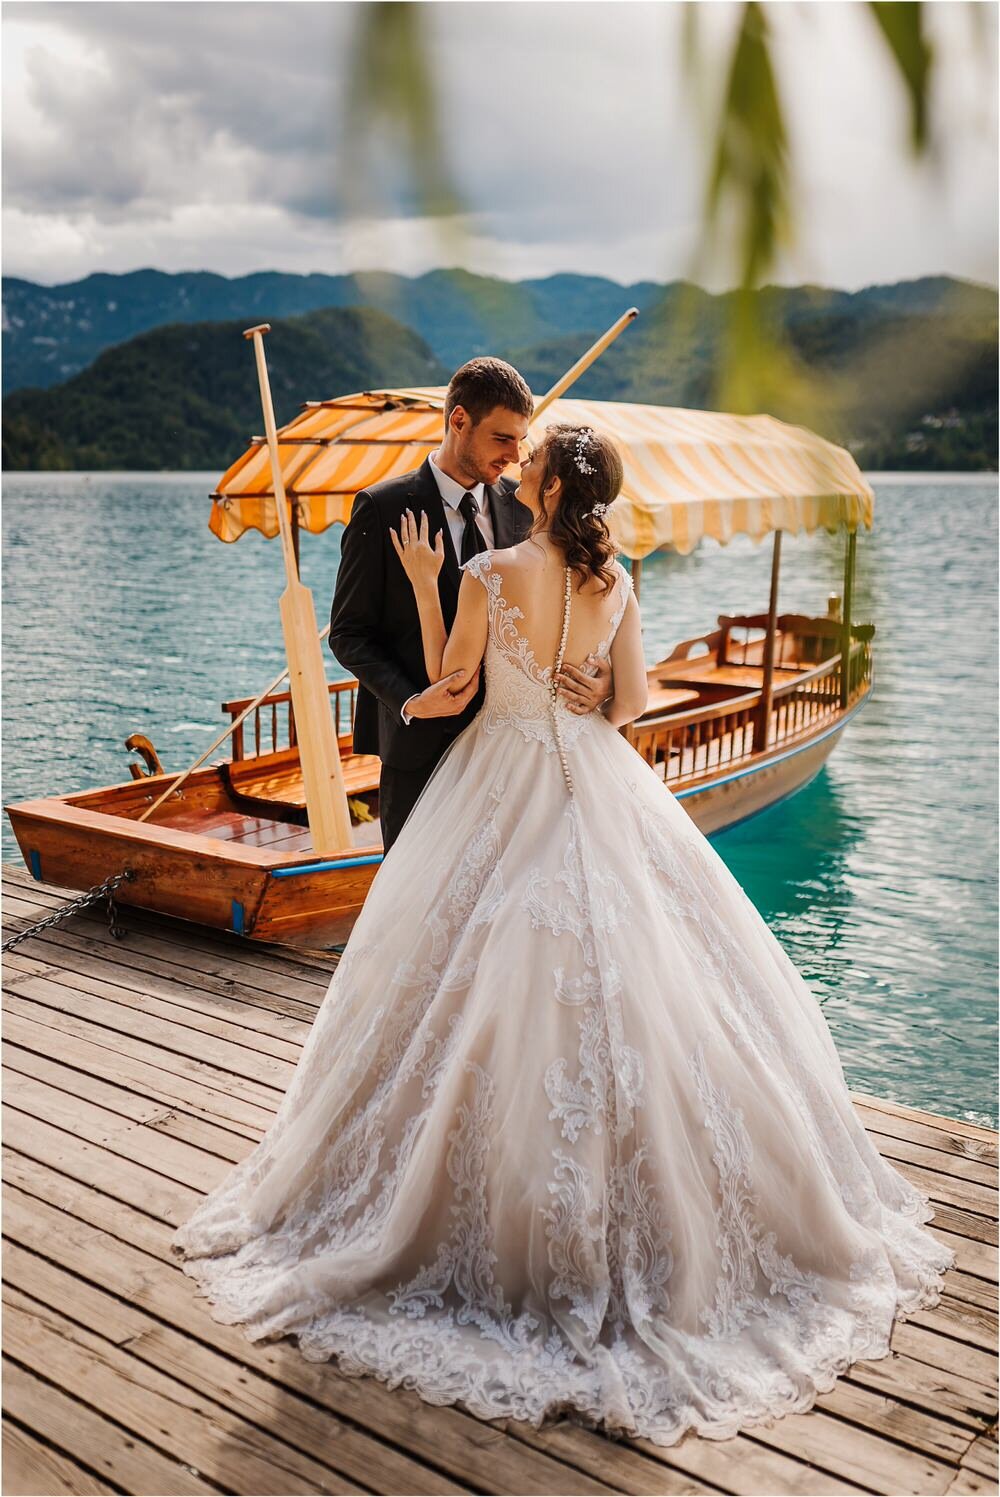 best of wedding photography 2019 photographer italy ireland tuscany santorini greece spain barcelona lake como chateux scotland destination wedding 0071.jpg